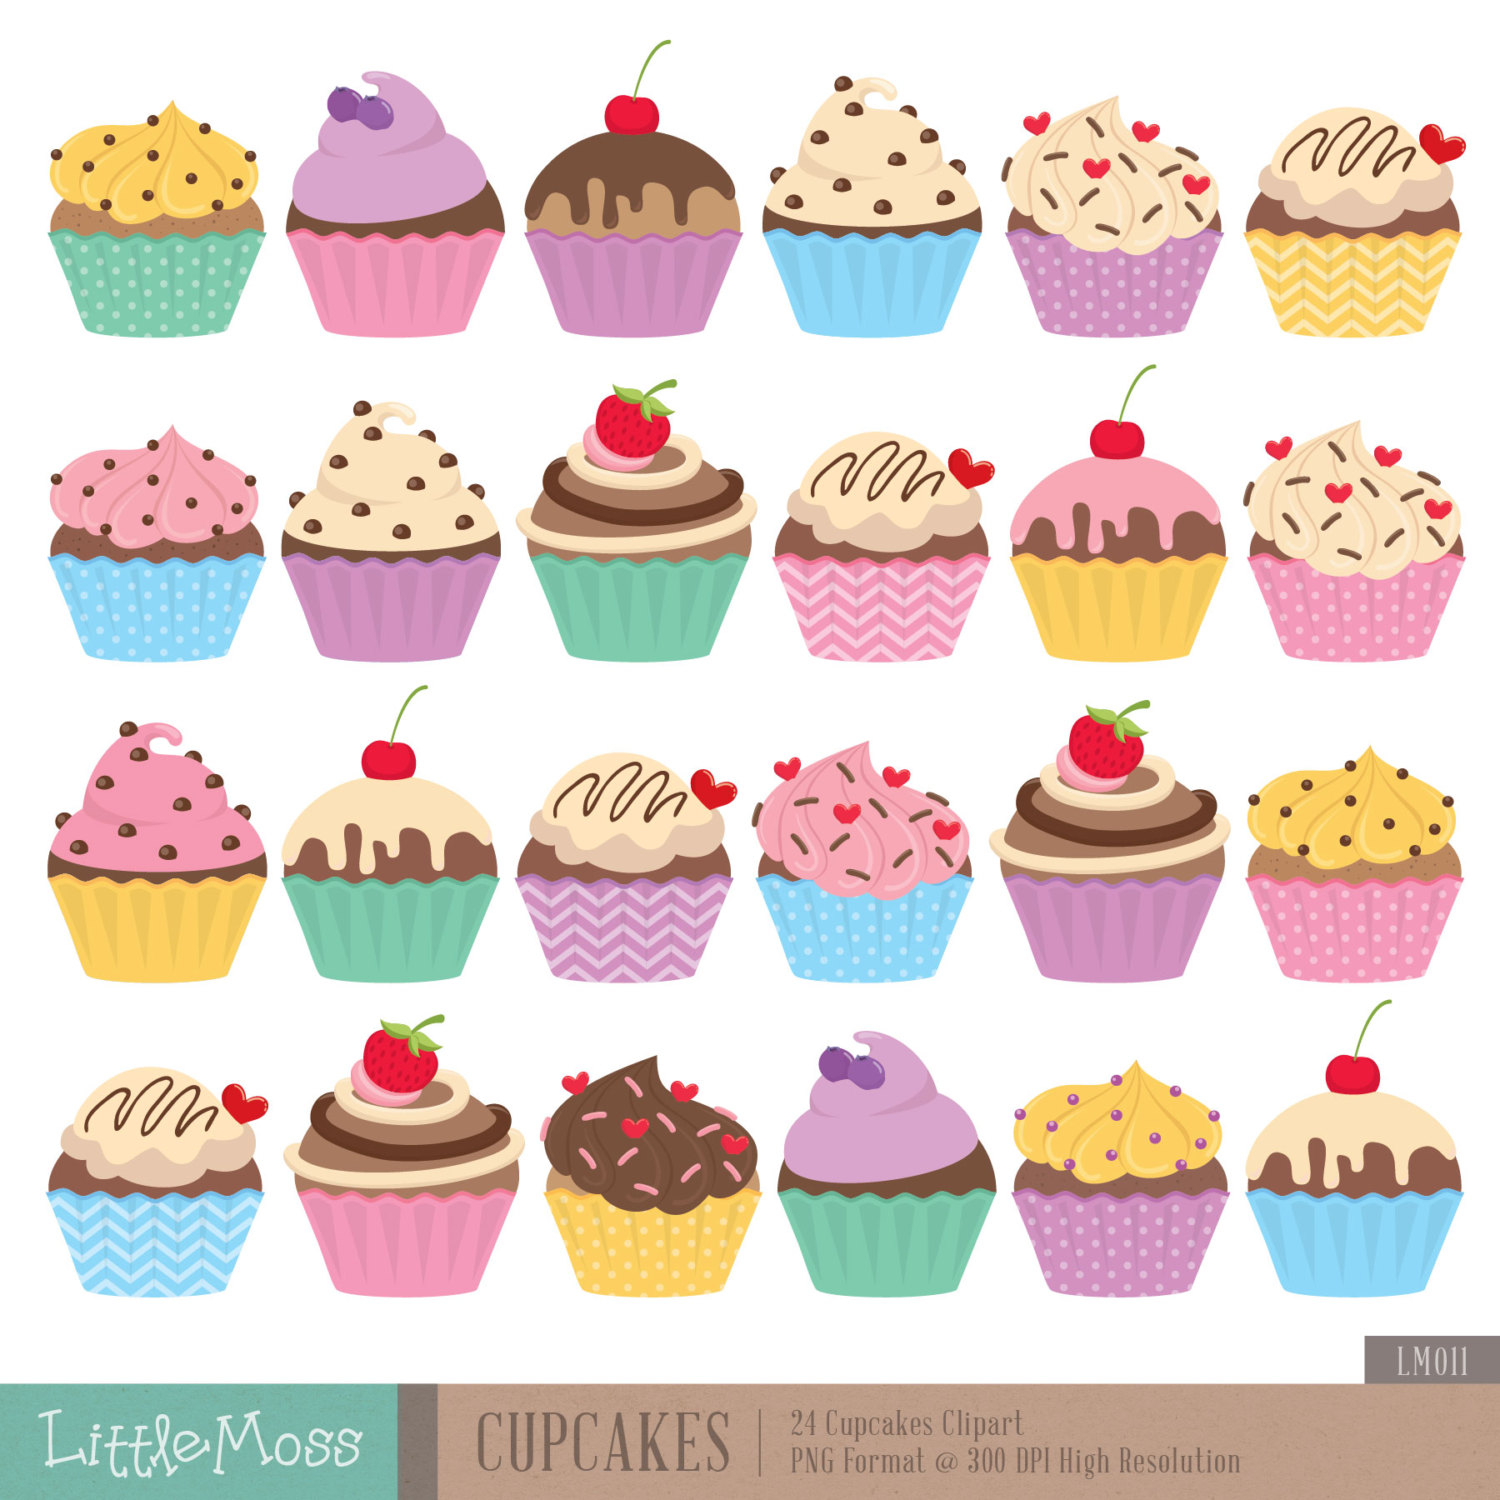 Cupcakes Digital Clipart By Littlemoss On Etsy